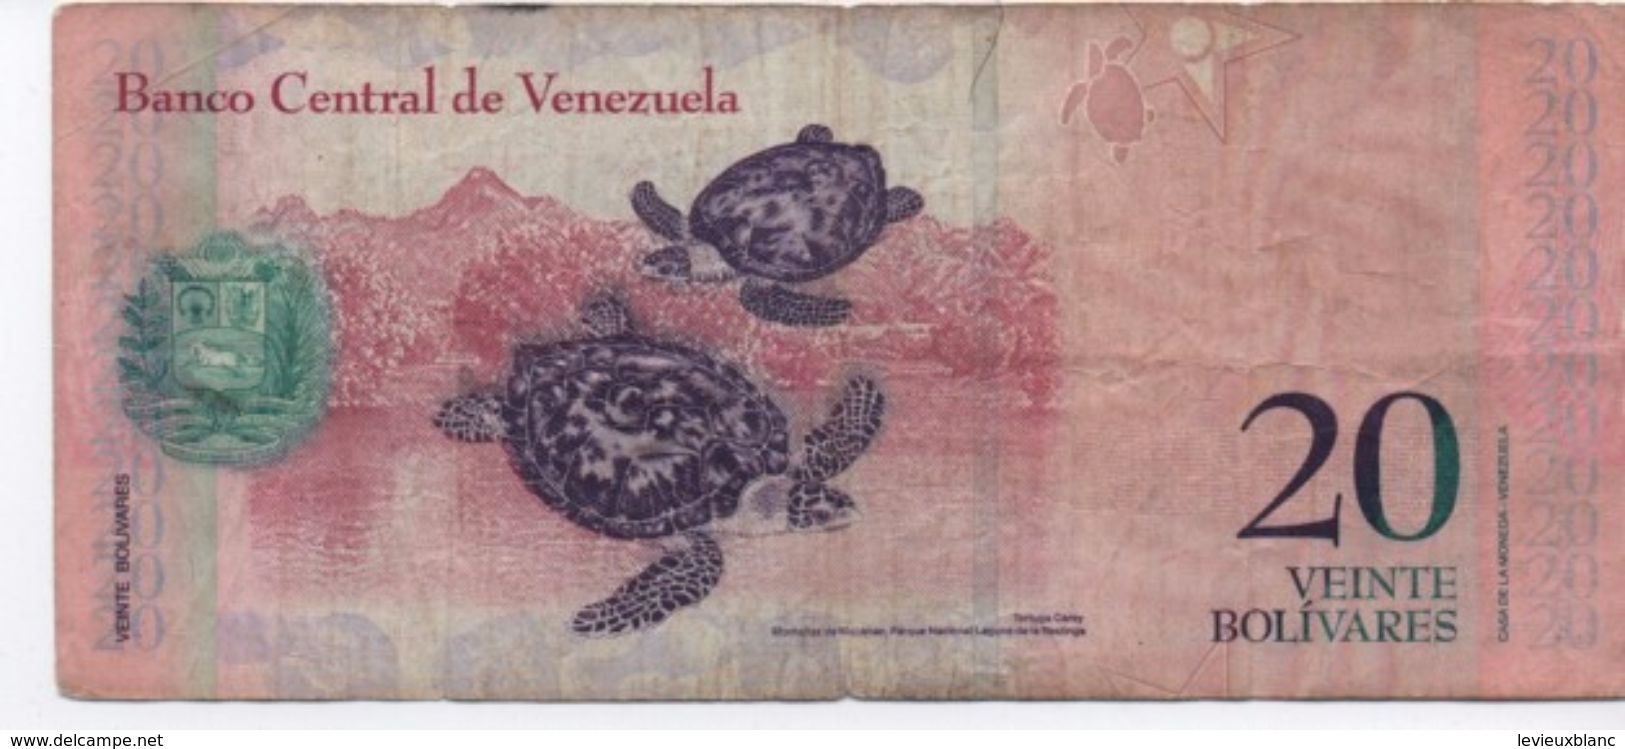 Billet/Venezuela/ Banco Central De Venezuela/ Républica Bolivariana De Venezuela/Veinte Bolivares/2007     BILL157 - Venezuela